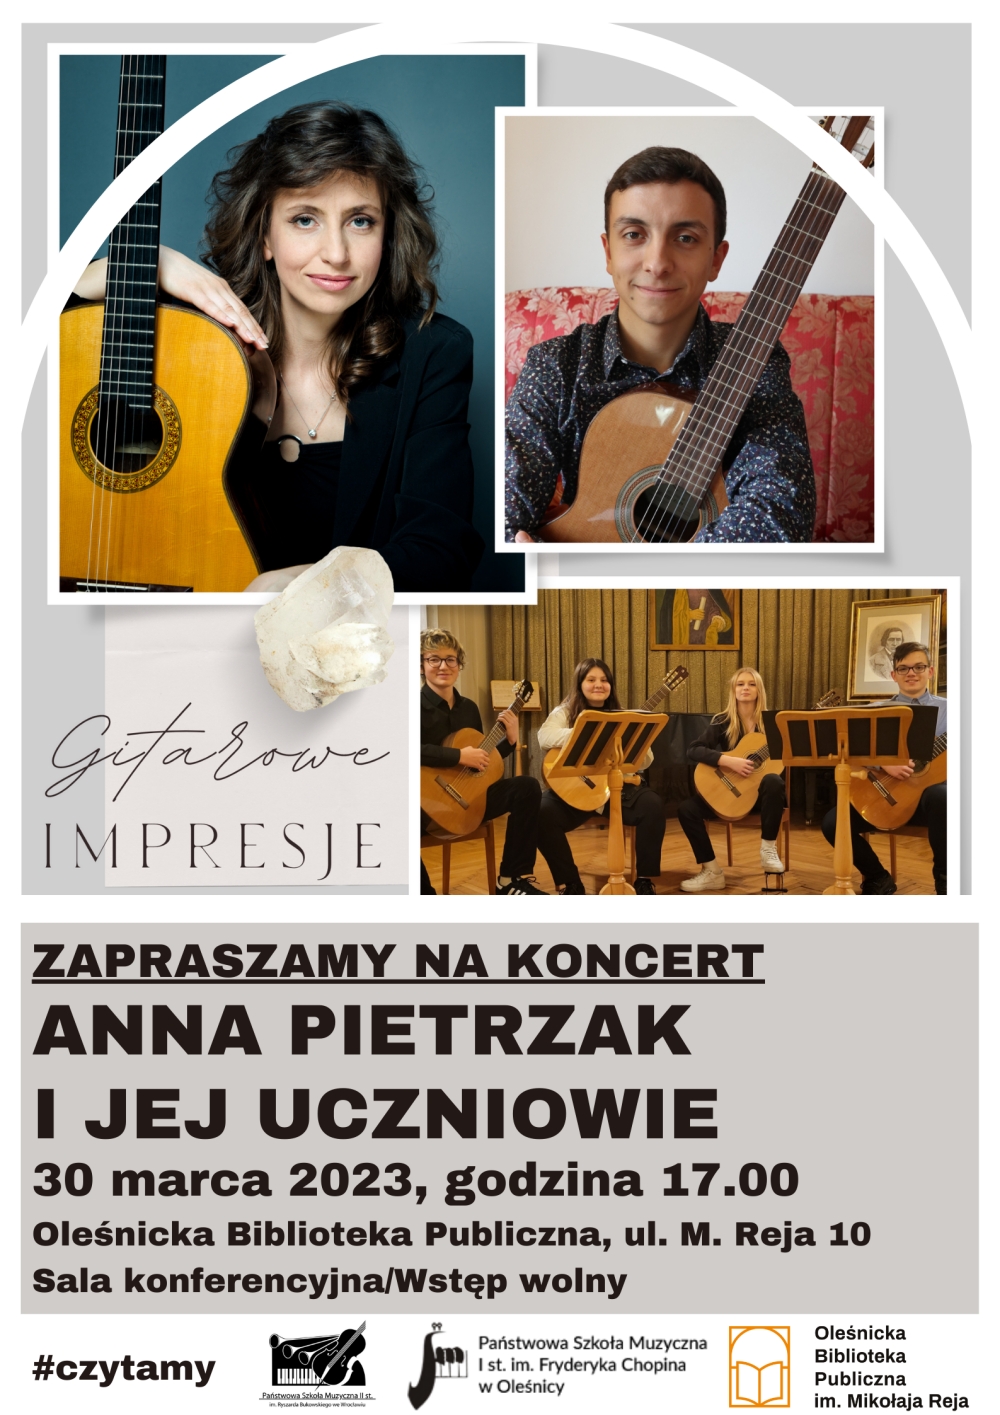 Plakat promujący koncert 